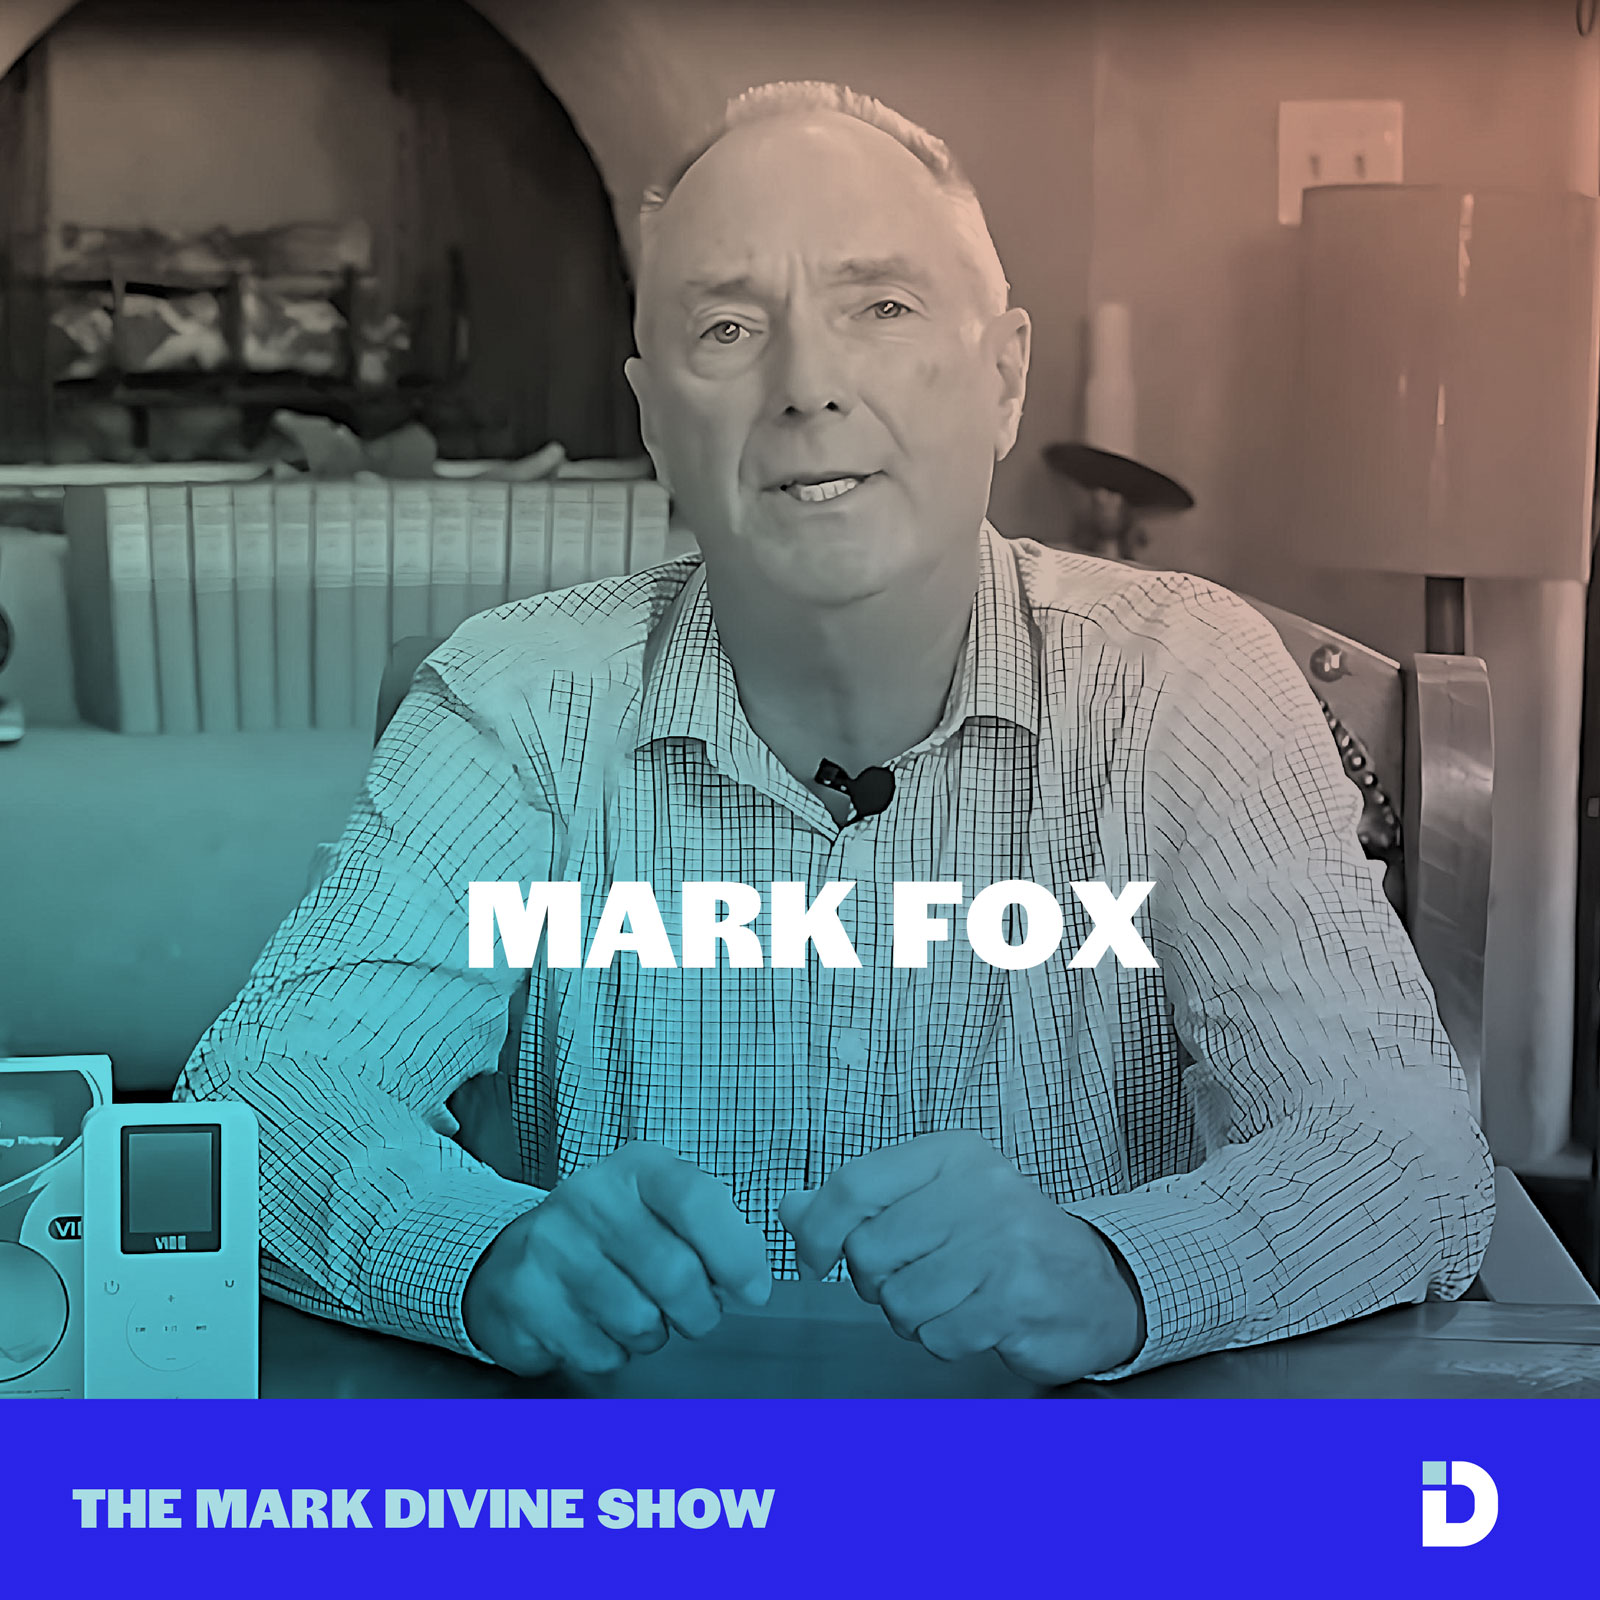 Mark Fox